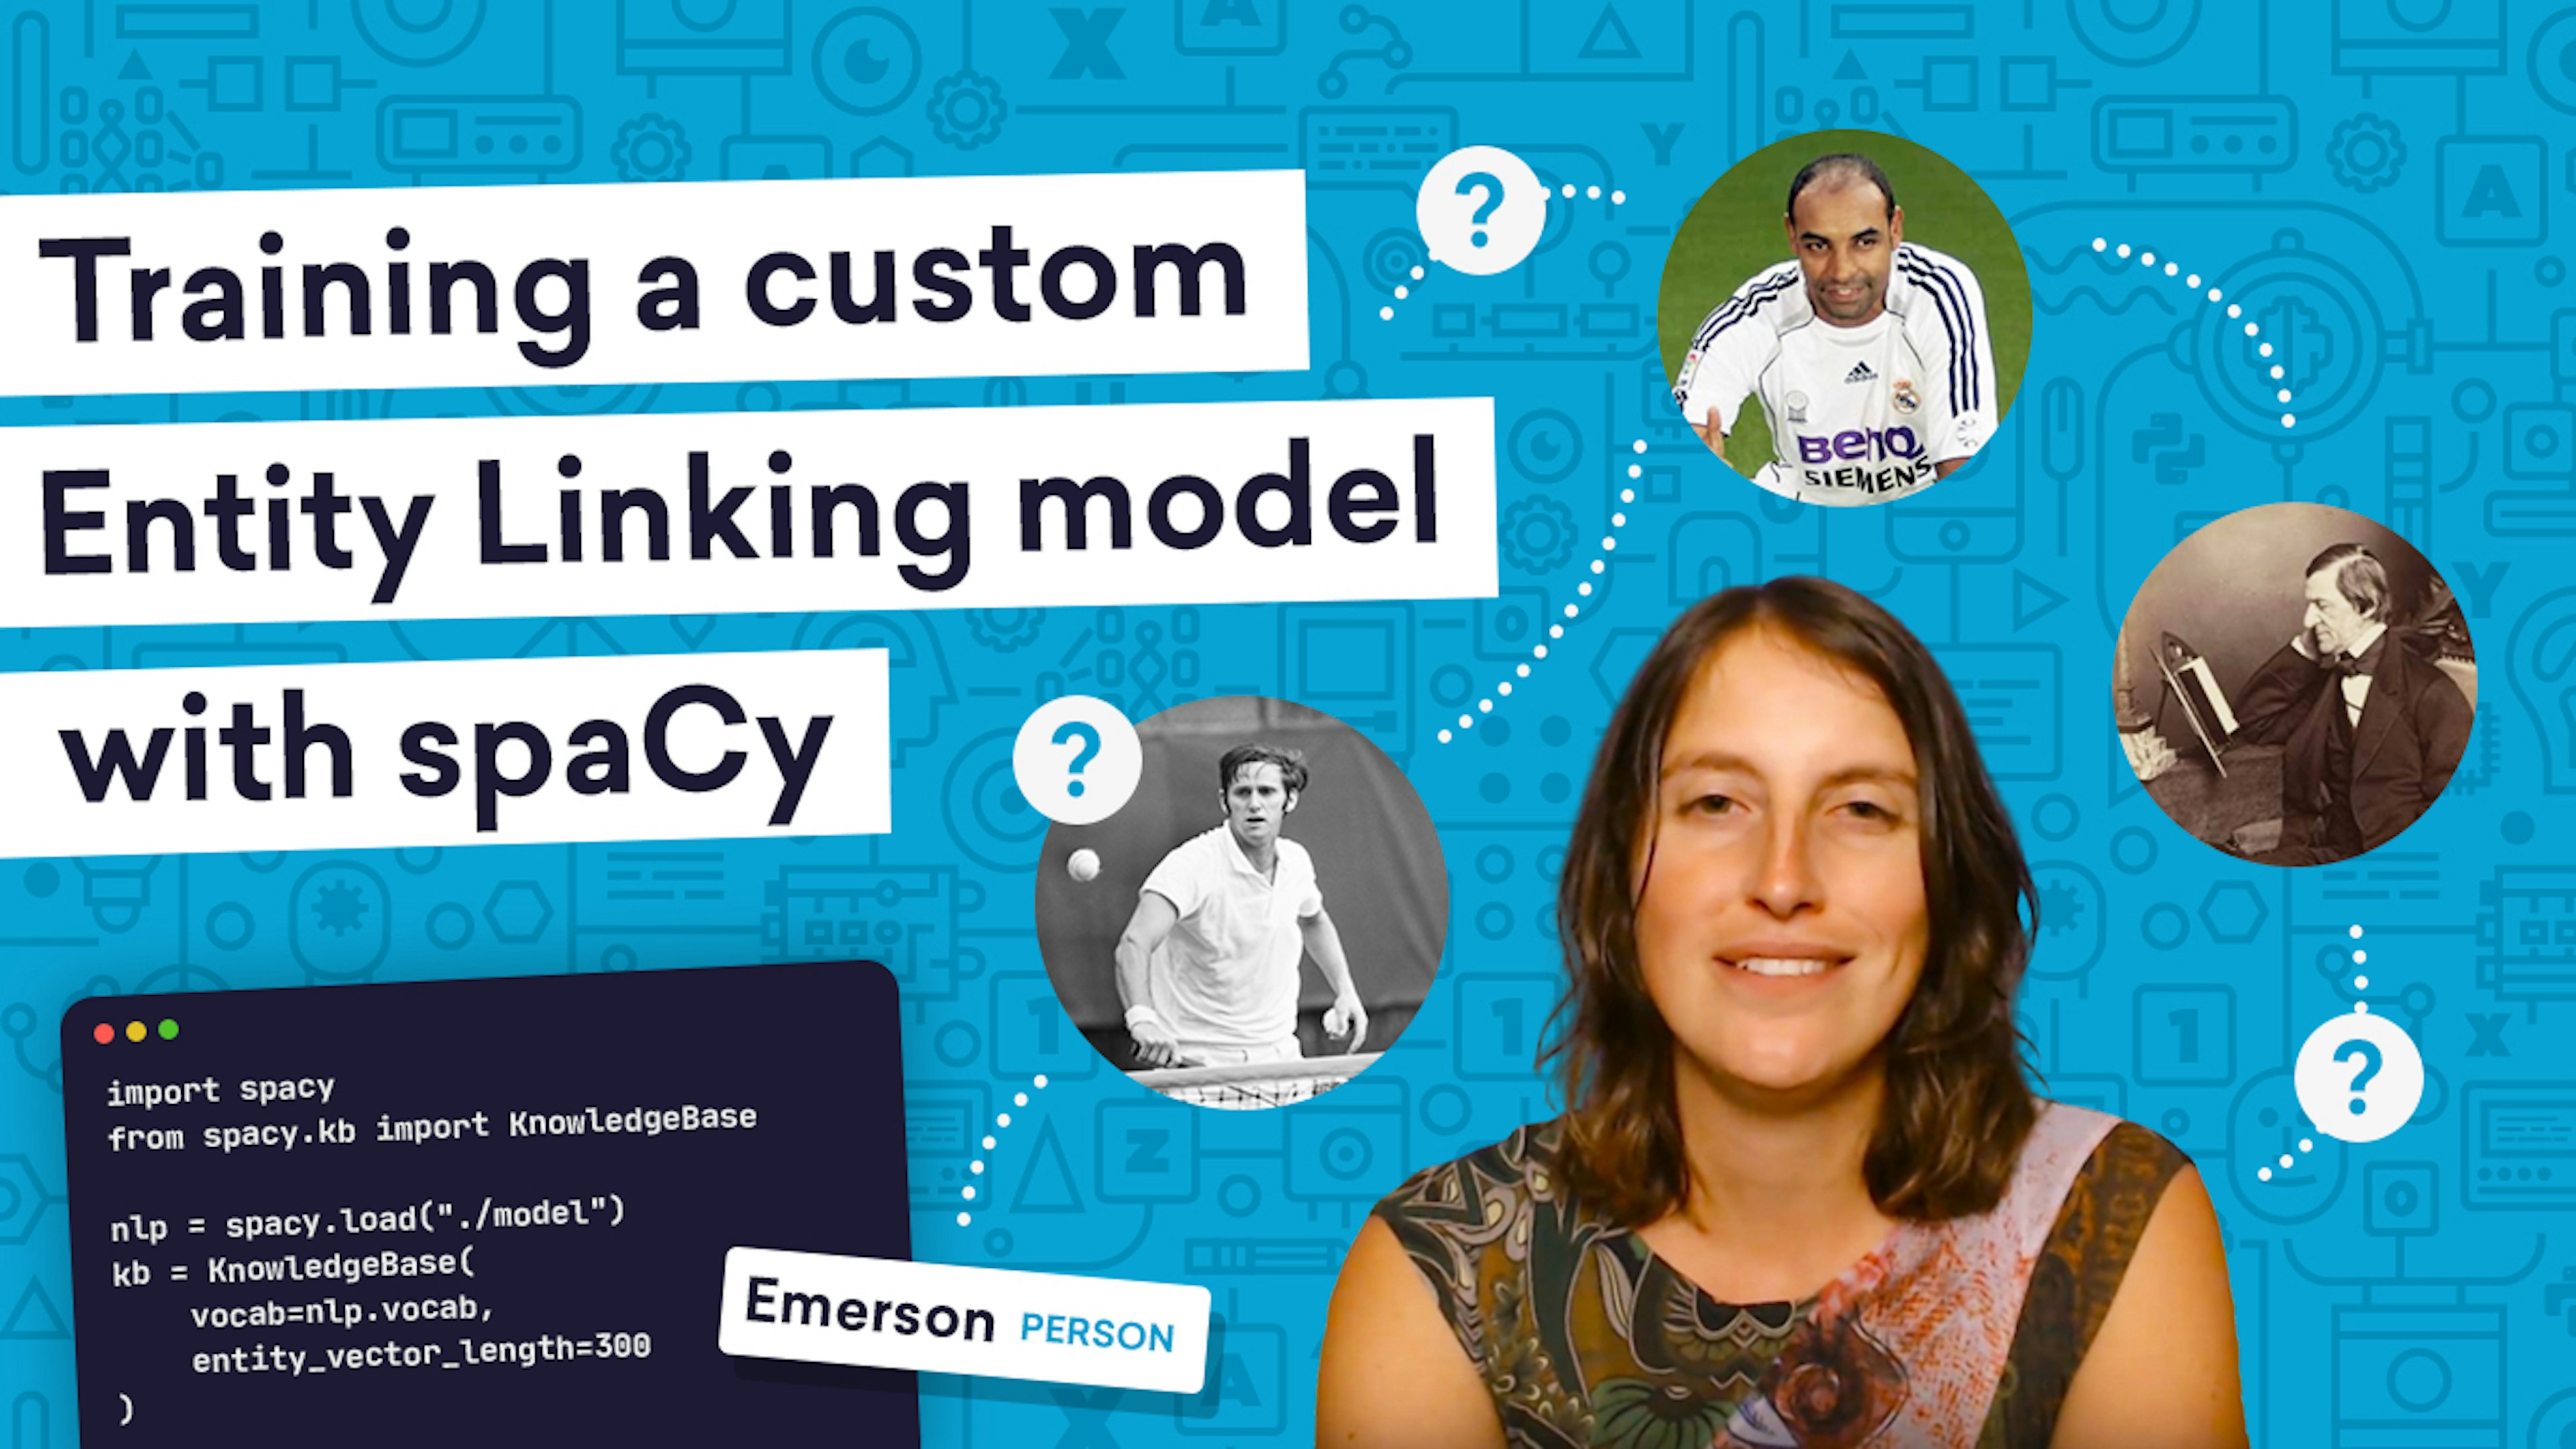 Training a custom entity linking model with spaCy